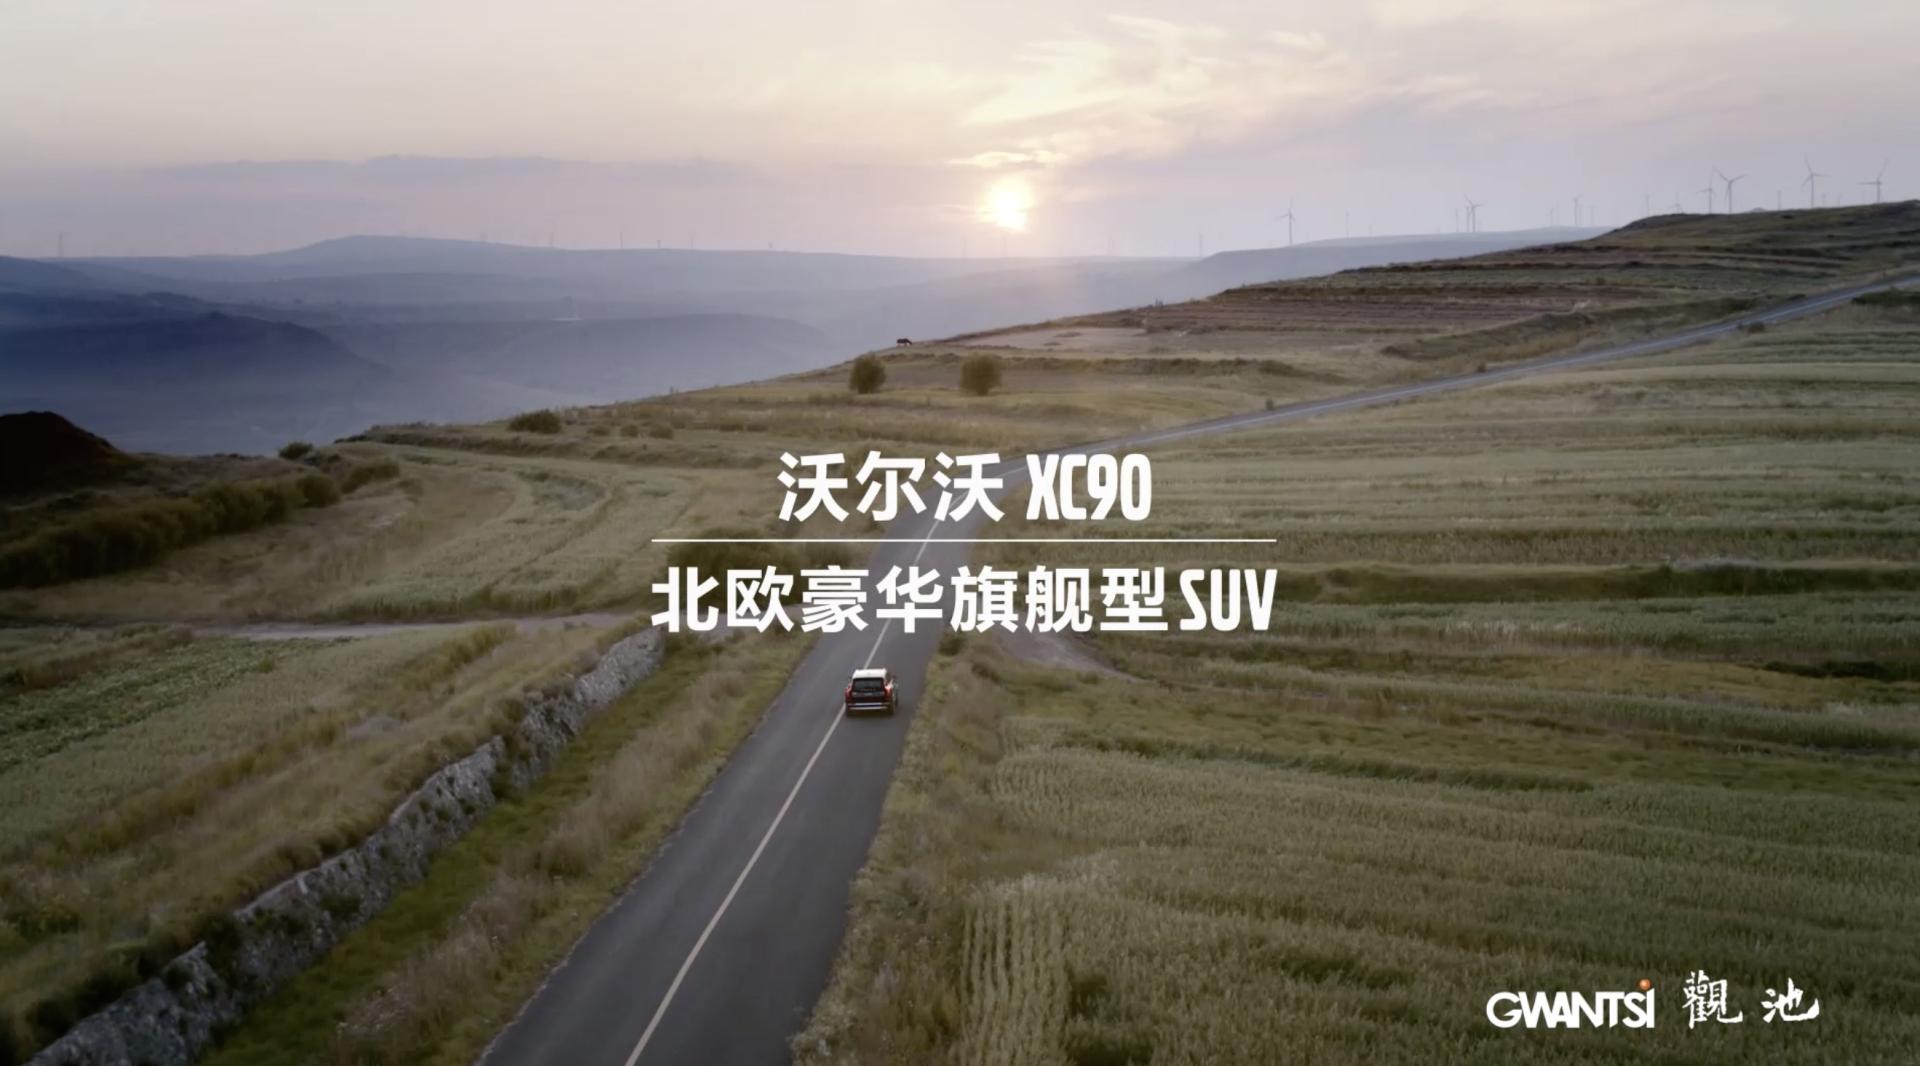 Volvo XC90 x 郎朗